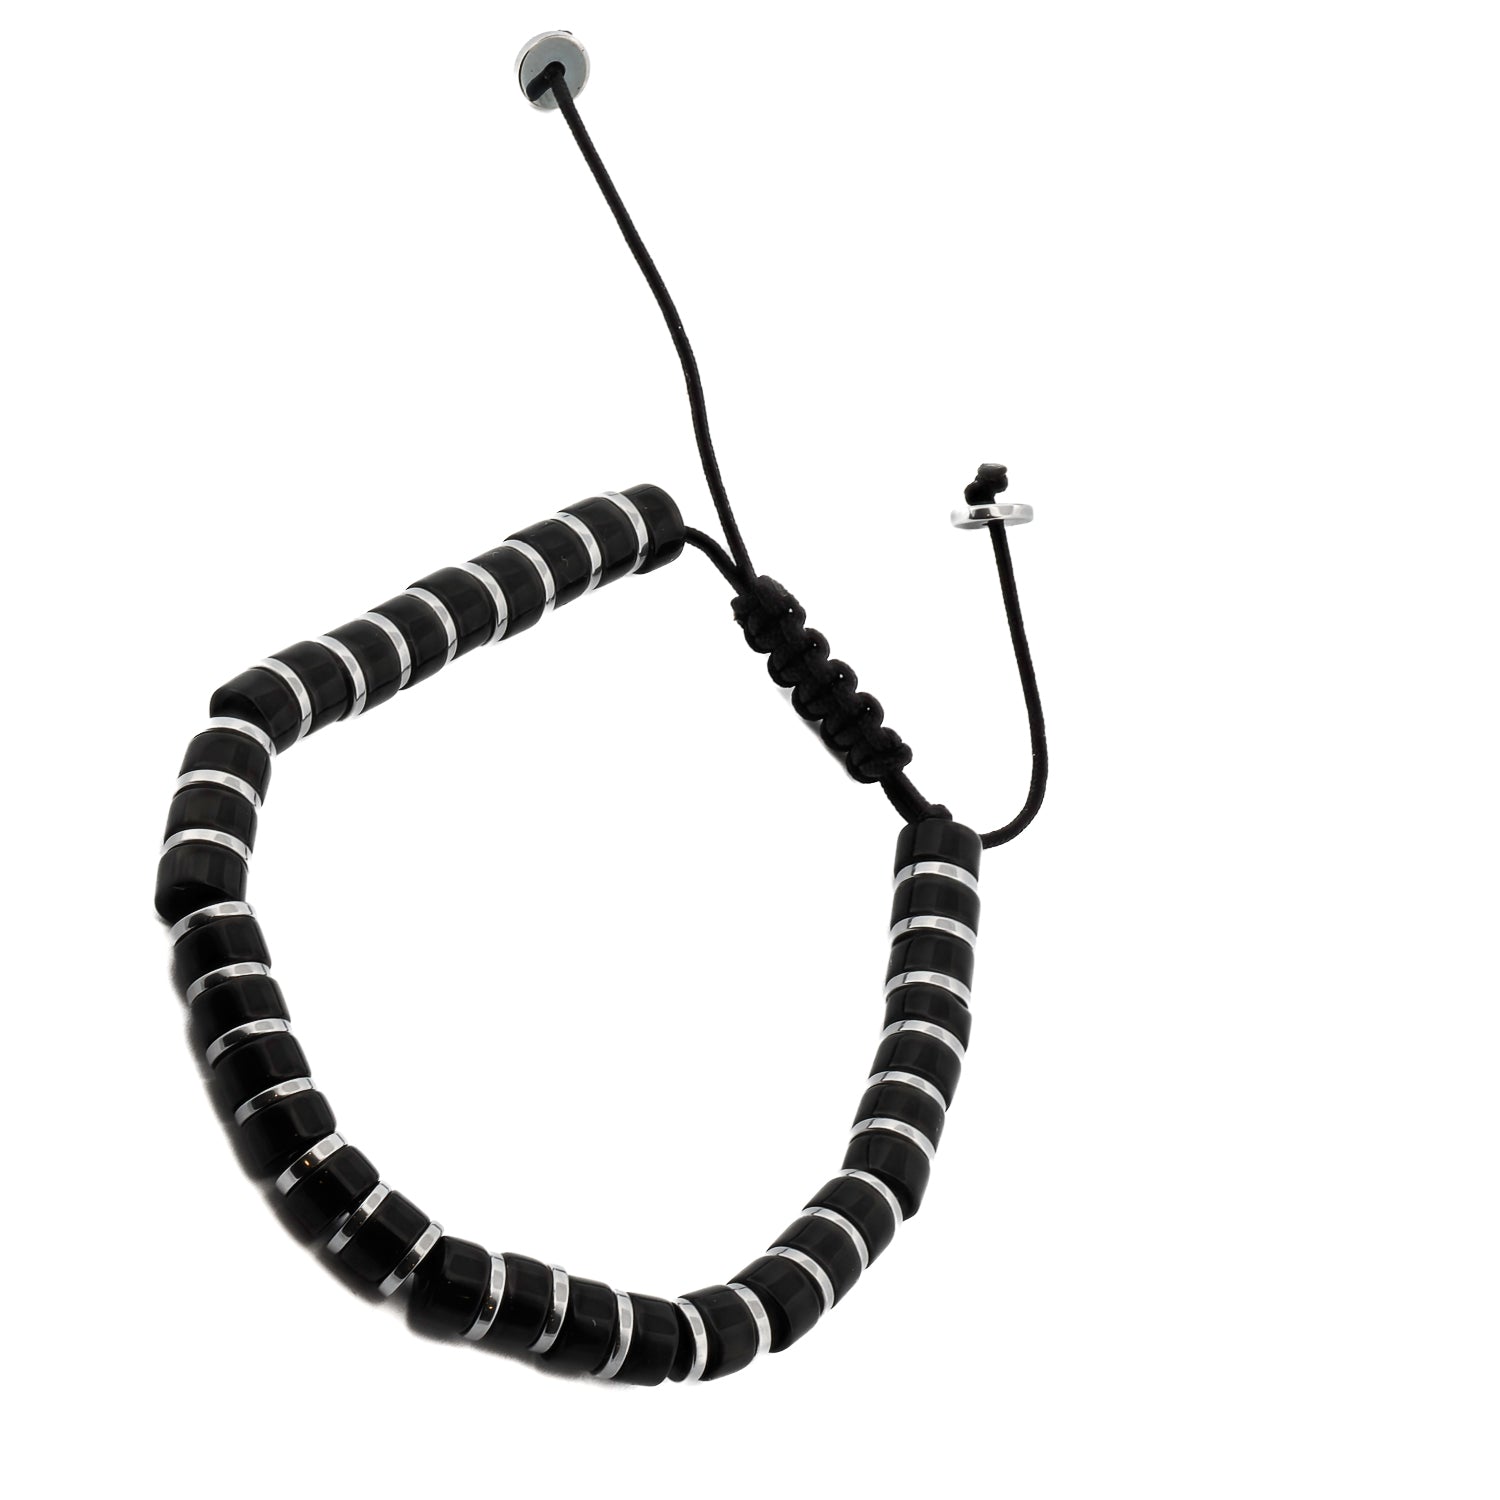 Adjustable Men's Black Onyx Stone Beaded Bracelet with striking onyx nugget beads and metallic hematite accents.